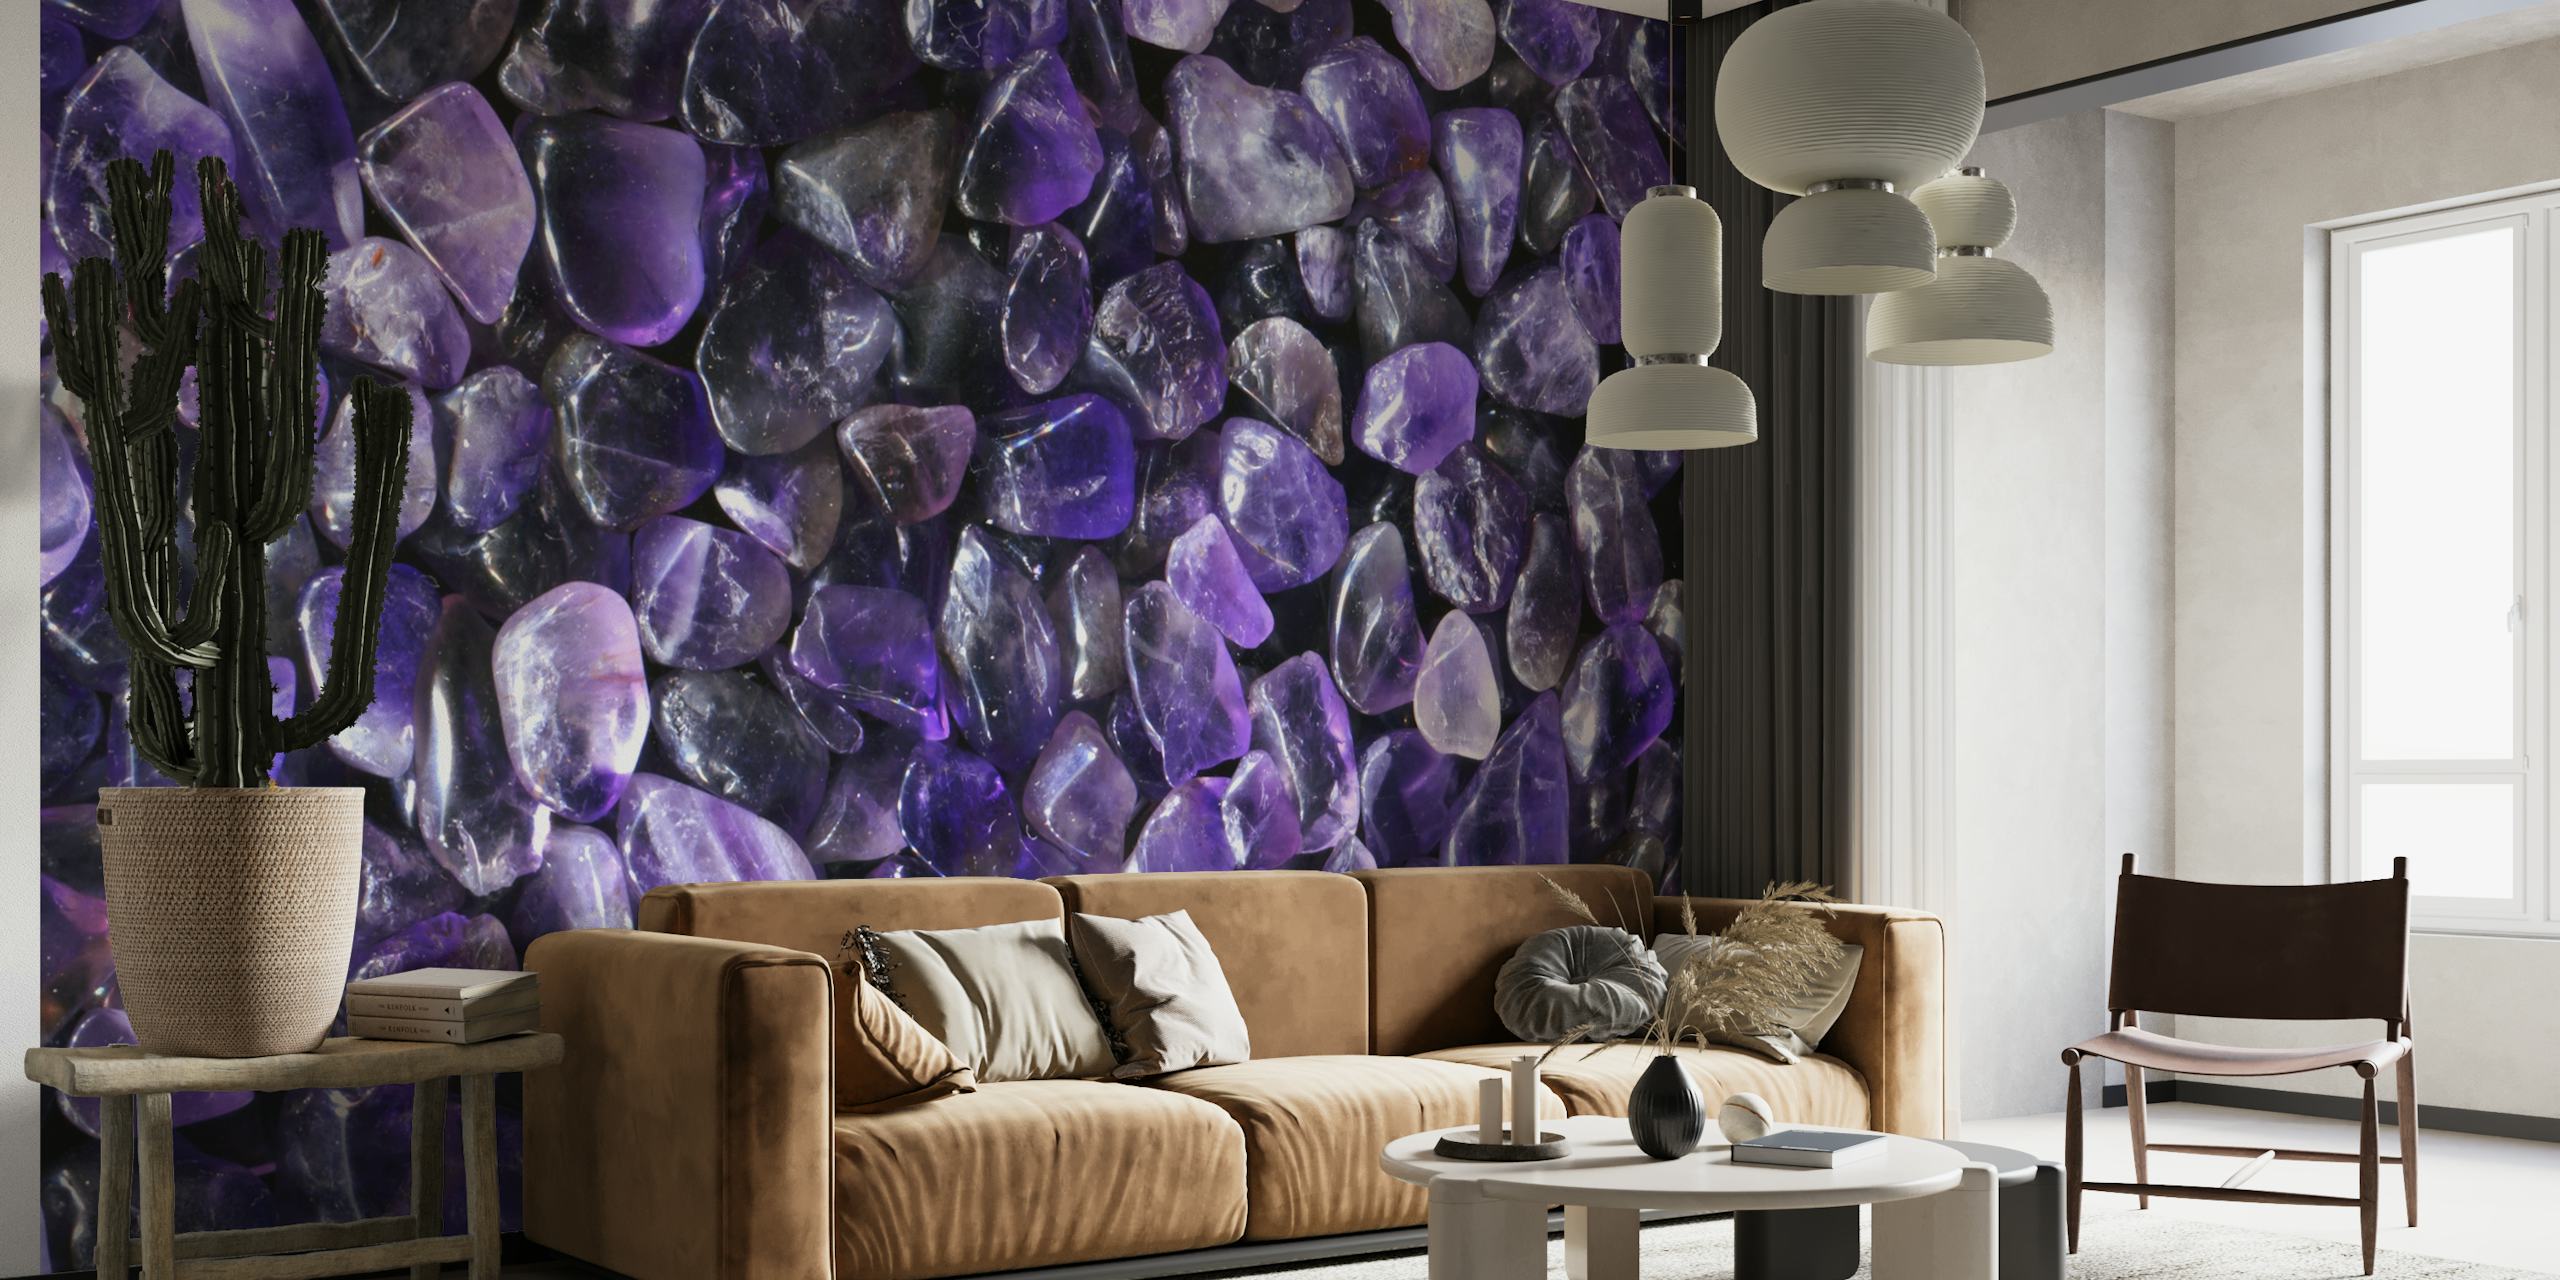 Lila ædelsten vægmaleri med en overdådig spredning af lilla krystallinske sten